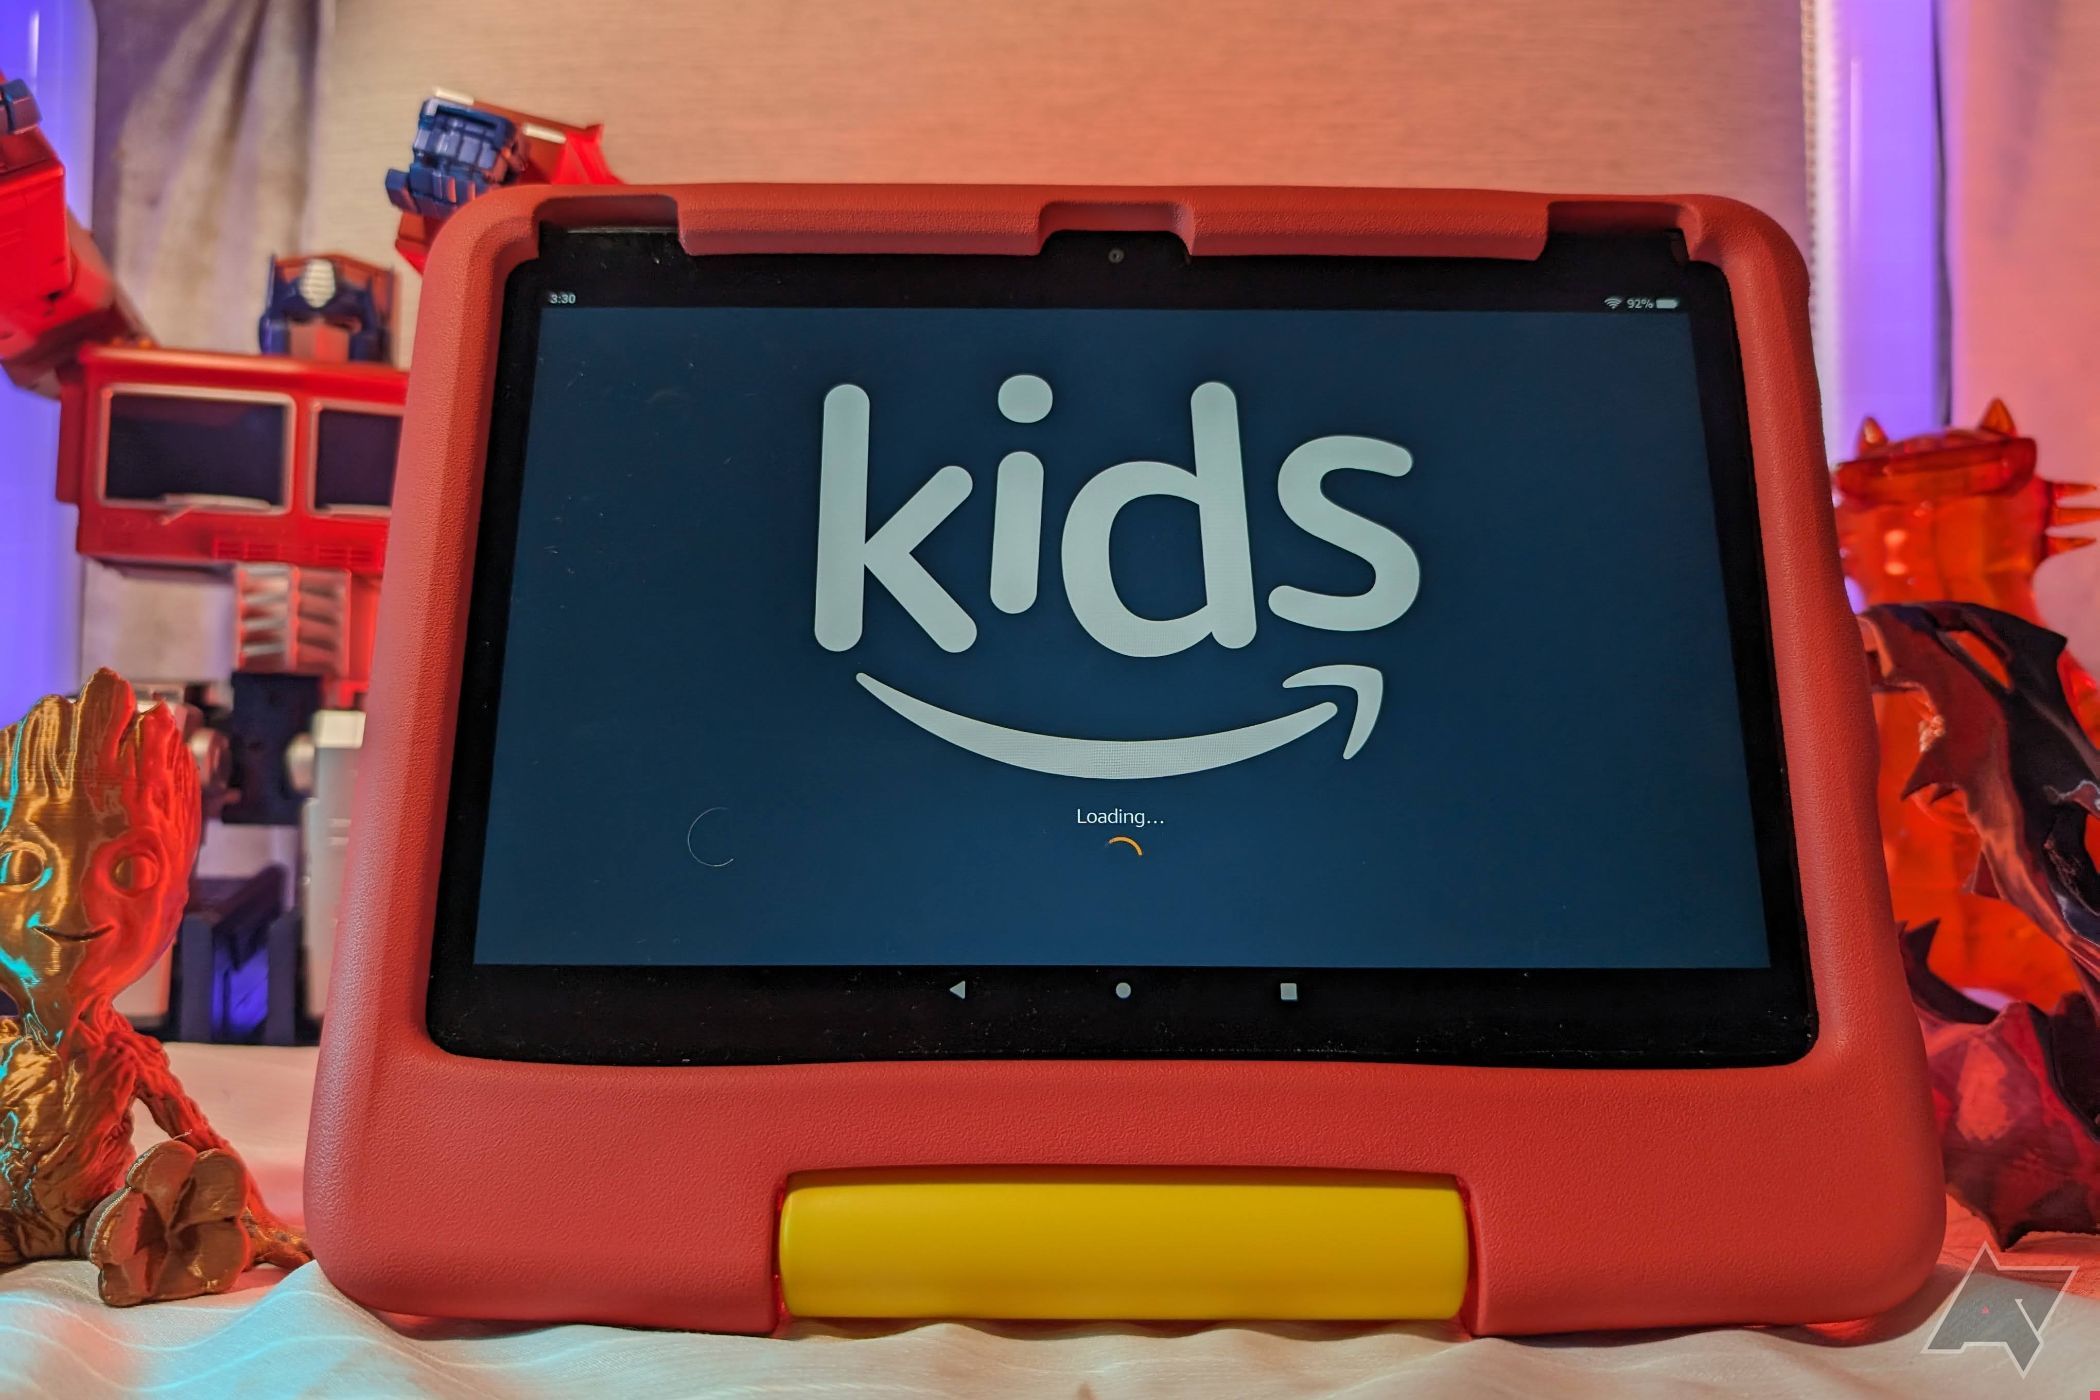 Amazon Fire HD 10 Kids showing the Amazon Kids logo